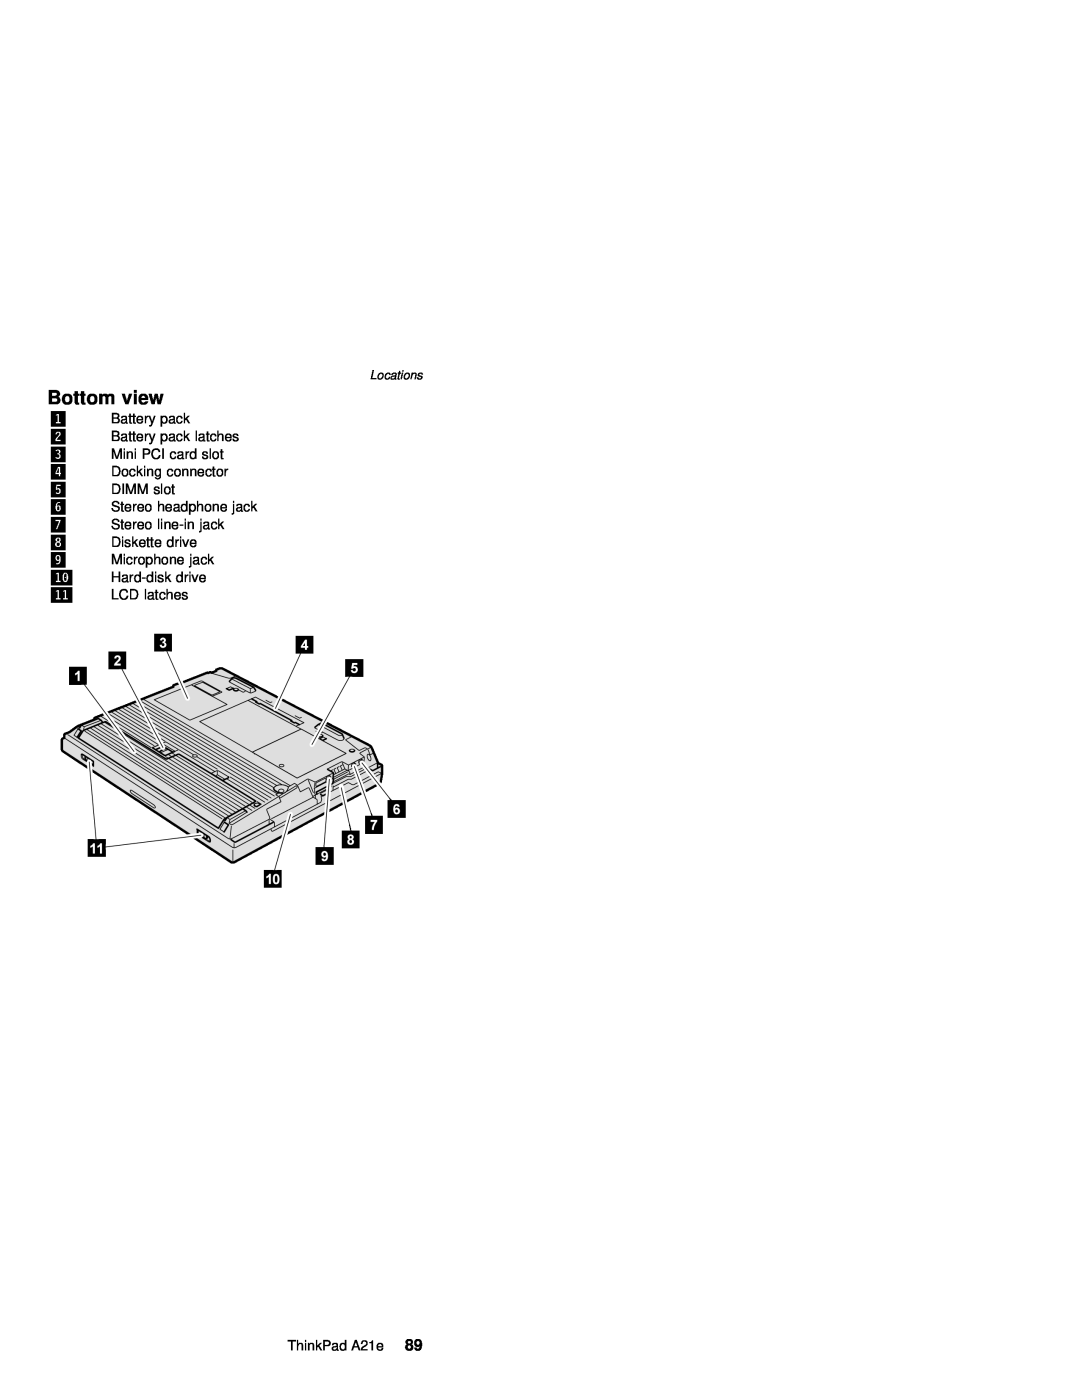 IBM MT 2632 manual Bottom view, Battery pack Battery pack latches Mini PCI card slot, ThinkPad A21e 